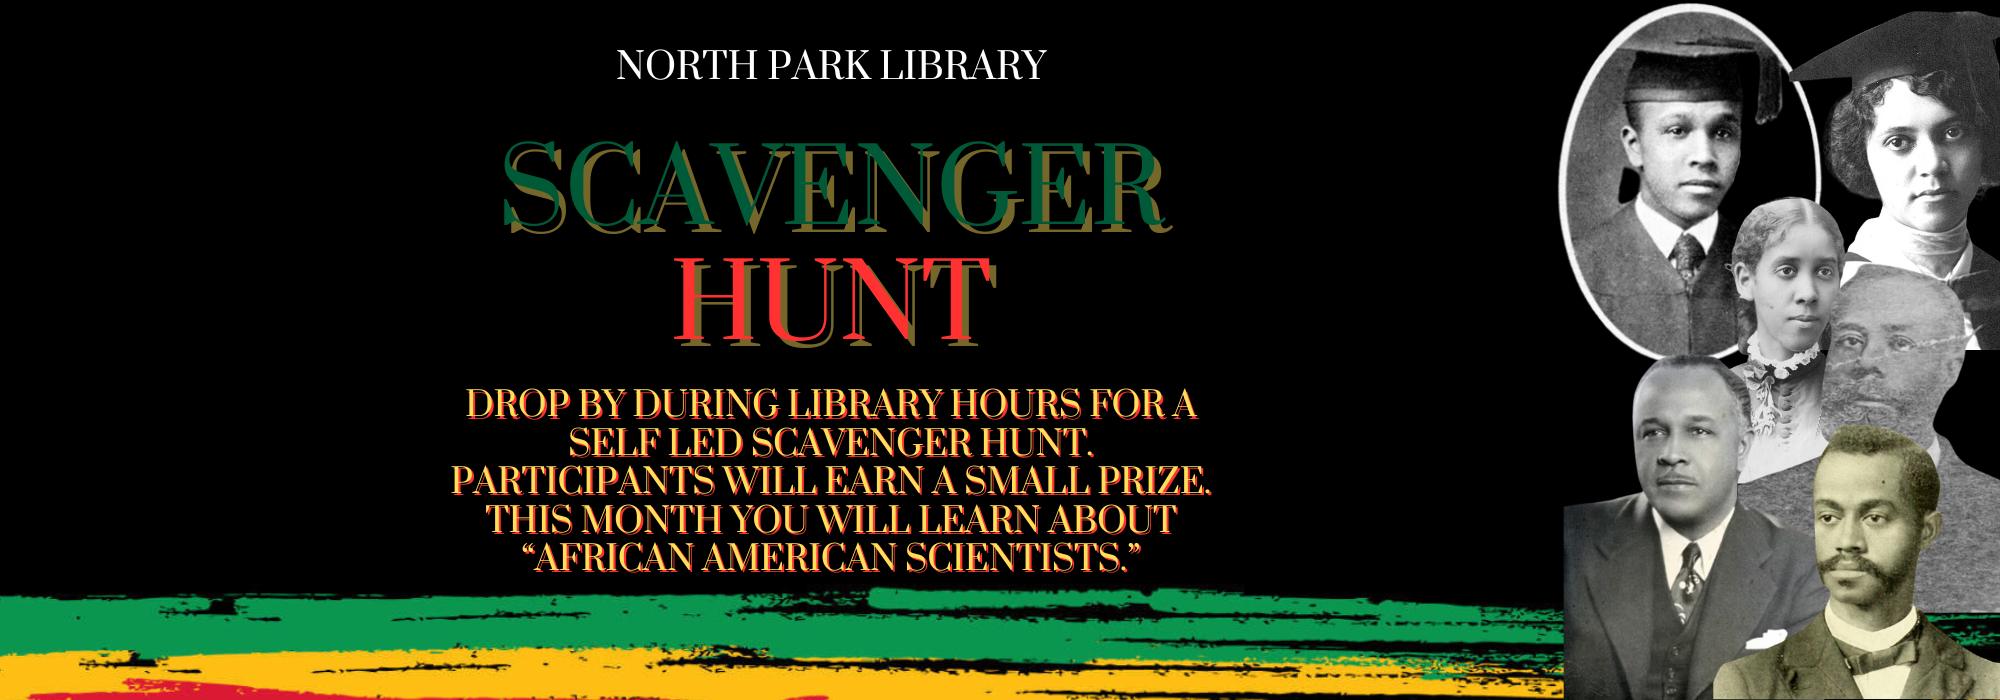 February Scavenger Hunt at North Park